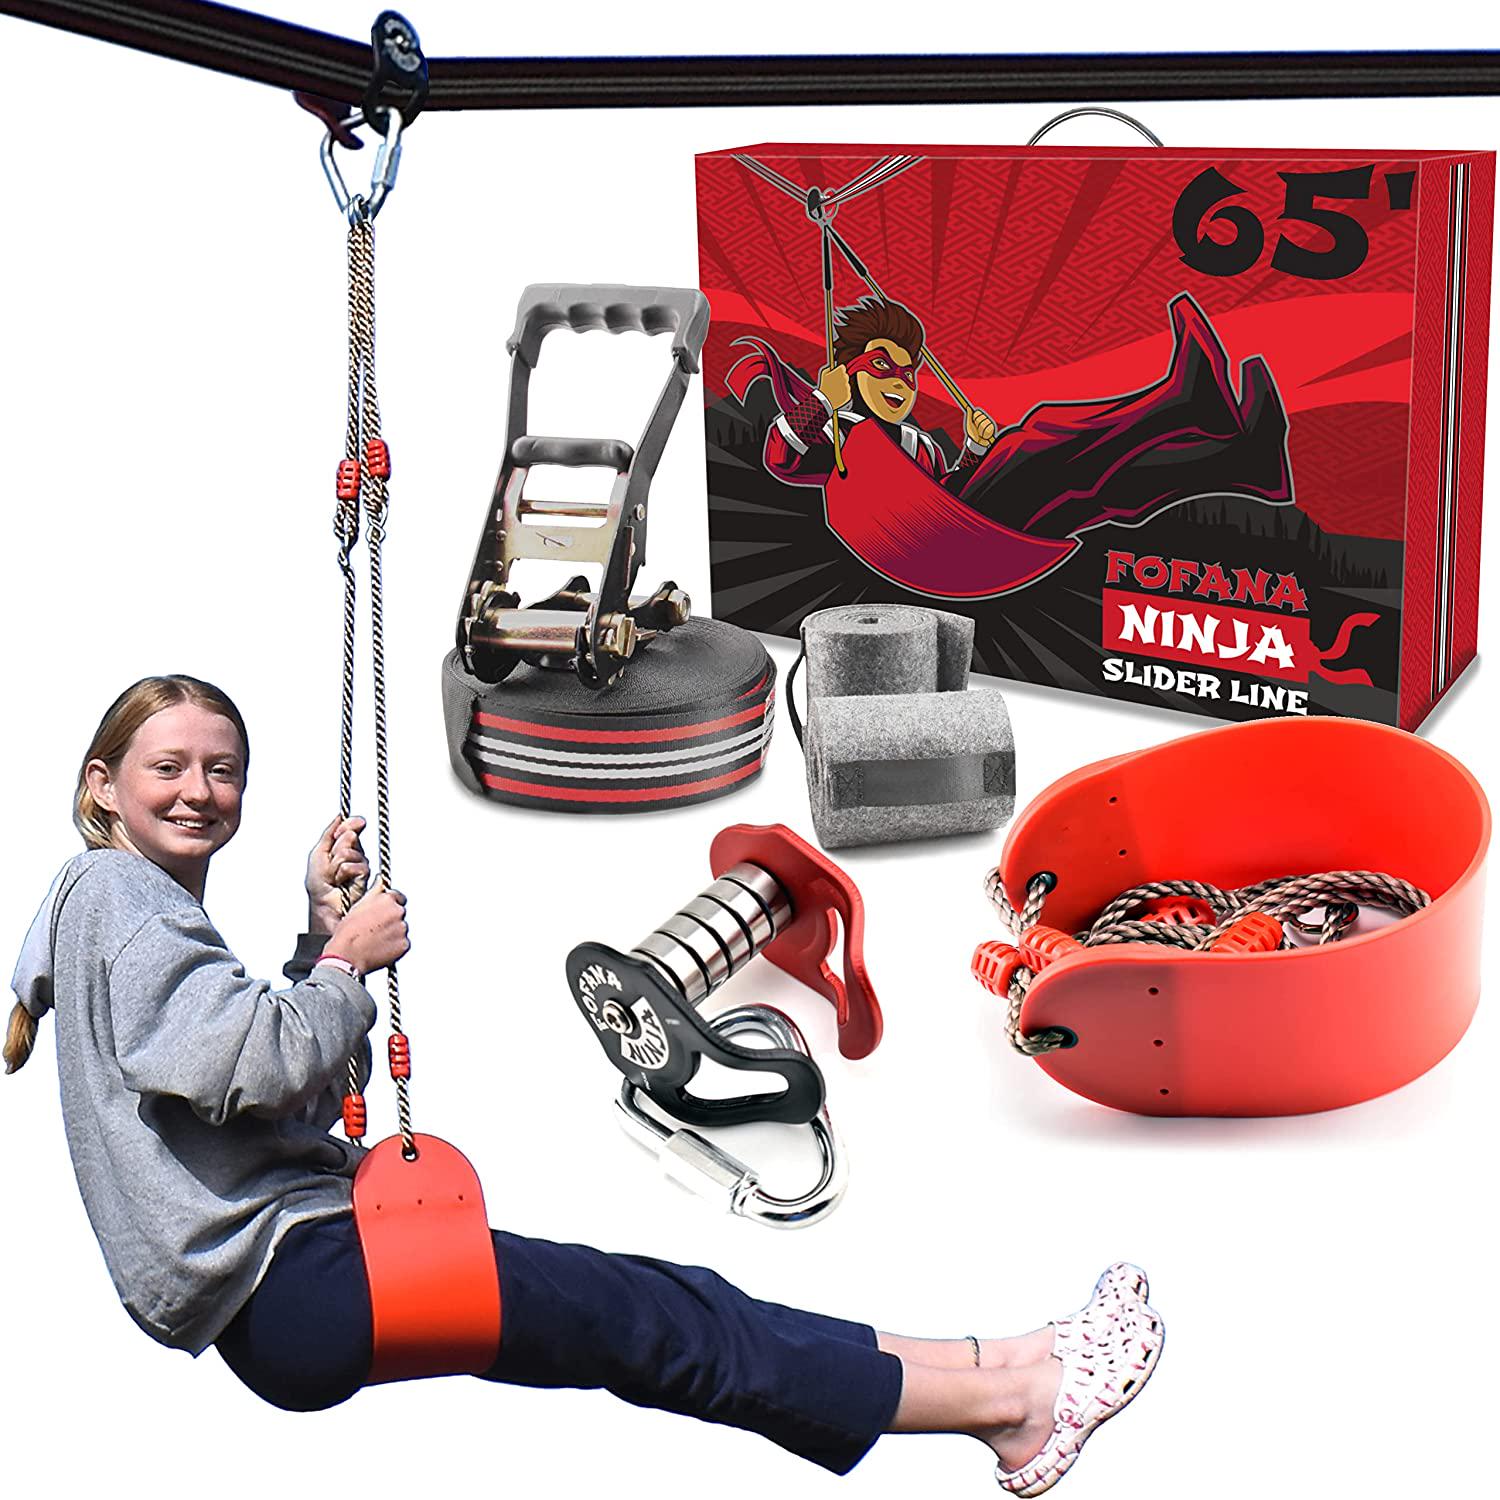 Fofana, Fofana Ninja Slider Slackline Pulley Kit - 65 Ft. Slack Line Zip Ninja Course - Includes Slackline, Slider Pulley, and Swing - Ninja Warrior Obstacle Course for Kids - Sports and Outdoor Play Toys